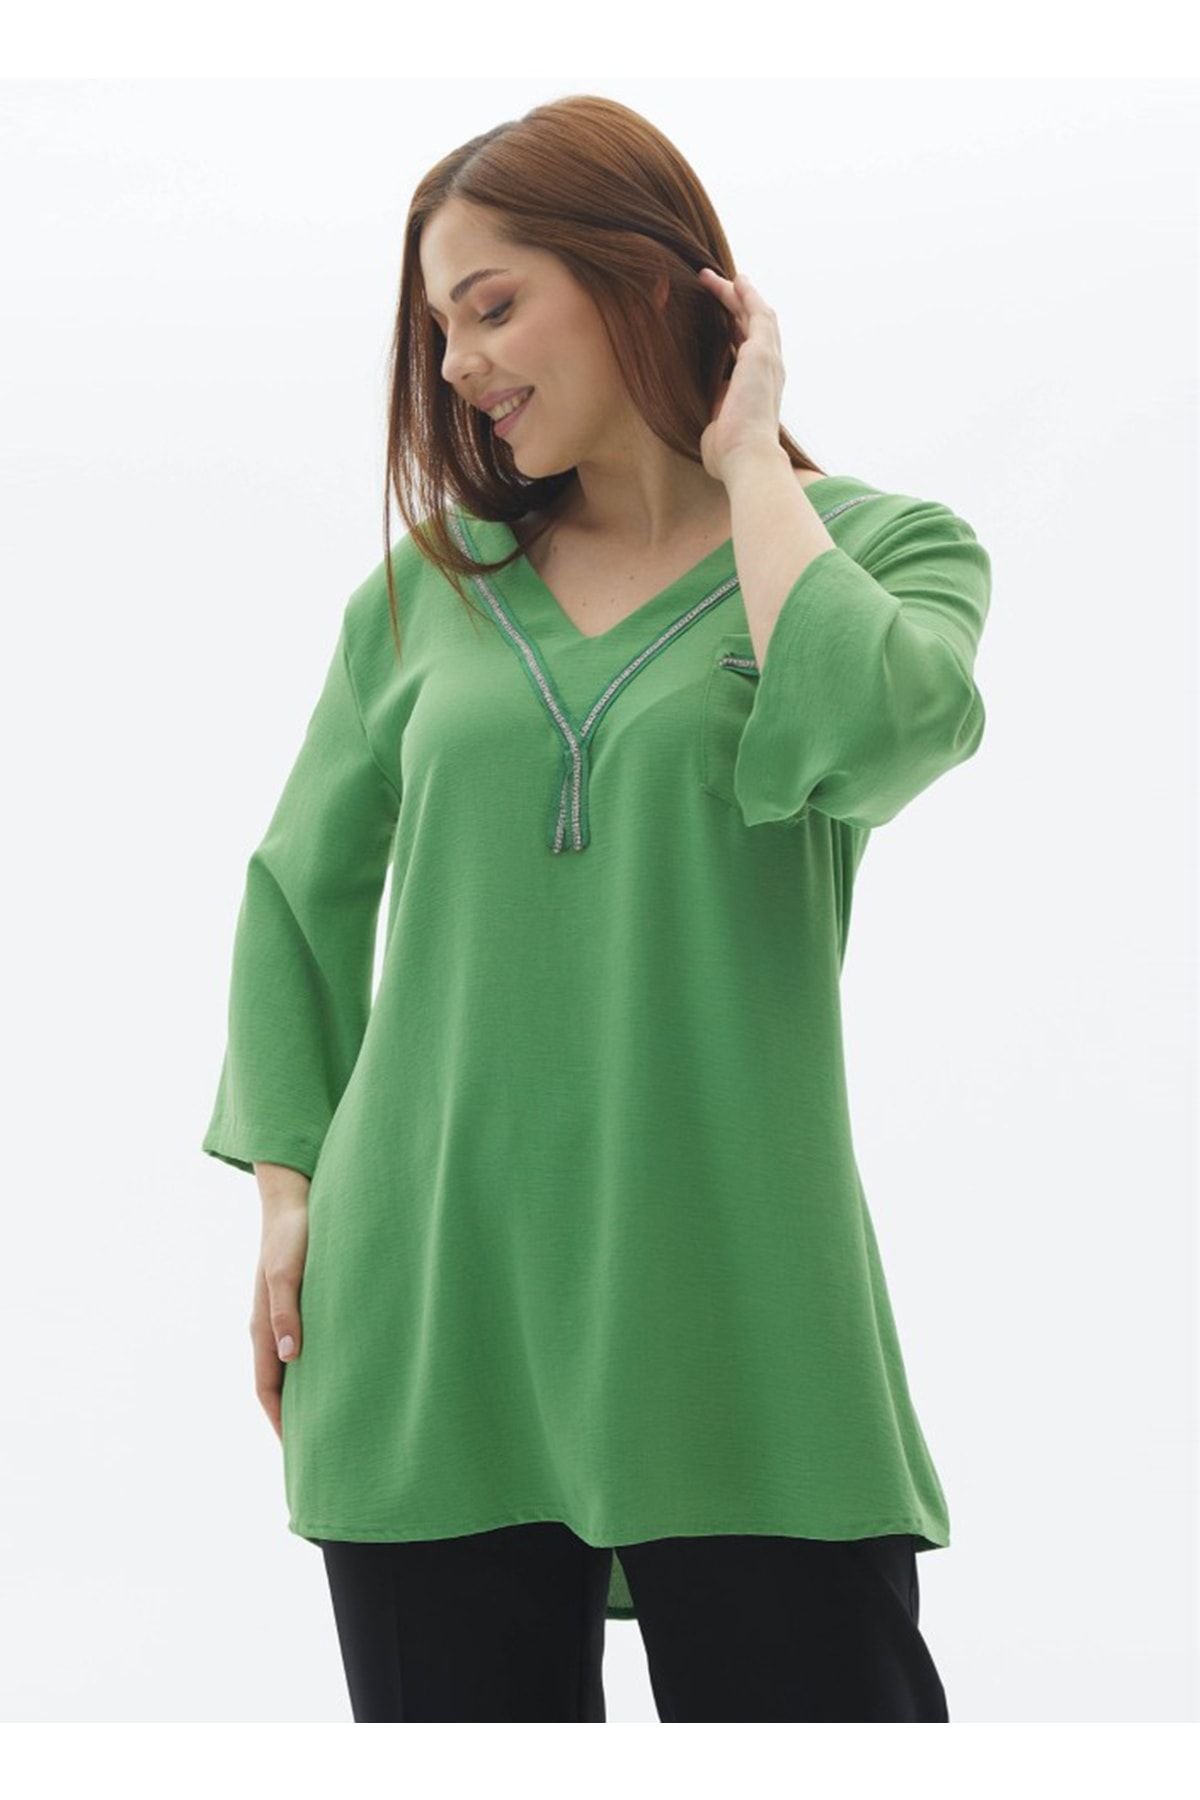 Selen V Yaka Taşlı Yeşil Kadın Bluz 23ysl8564